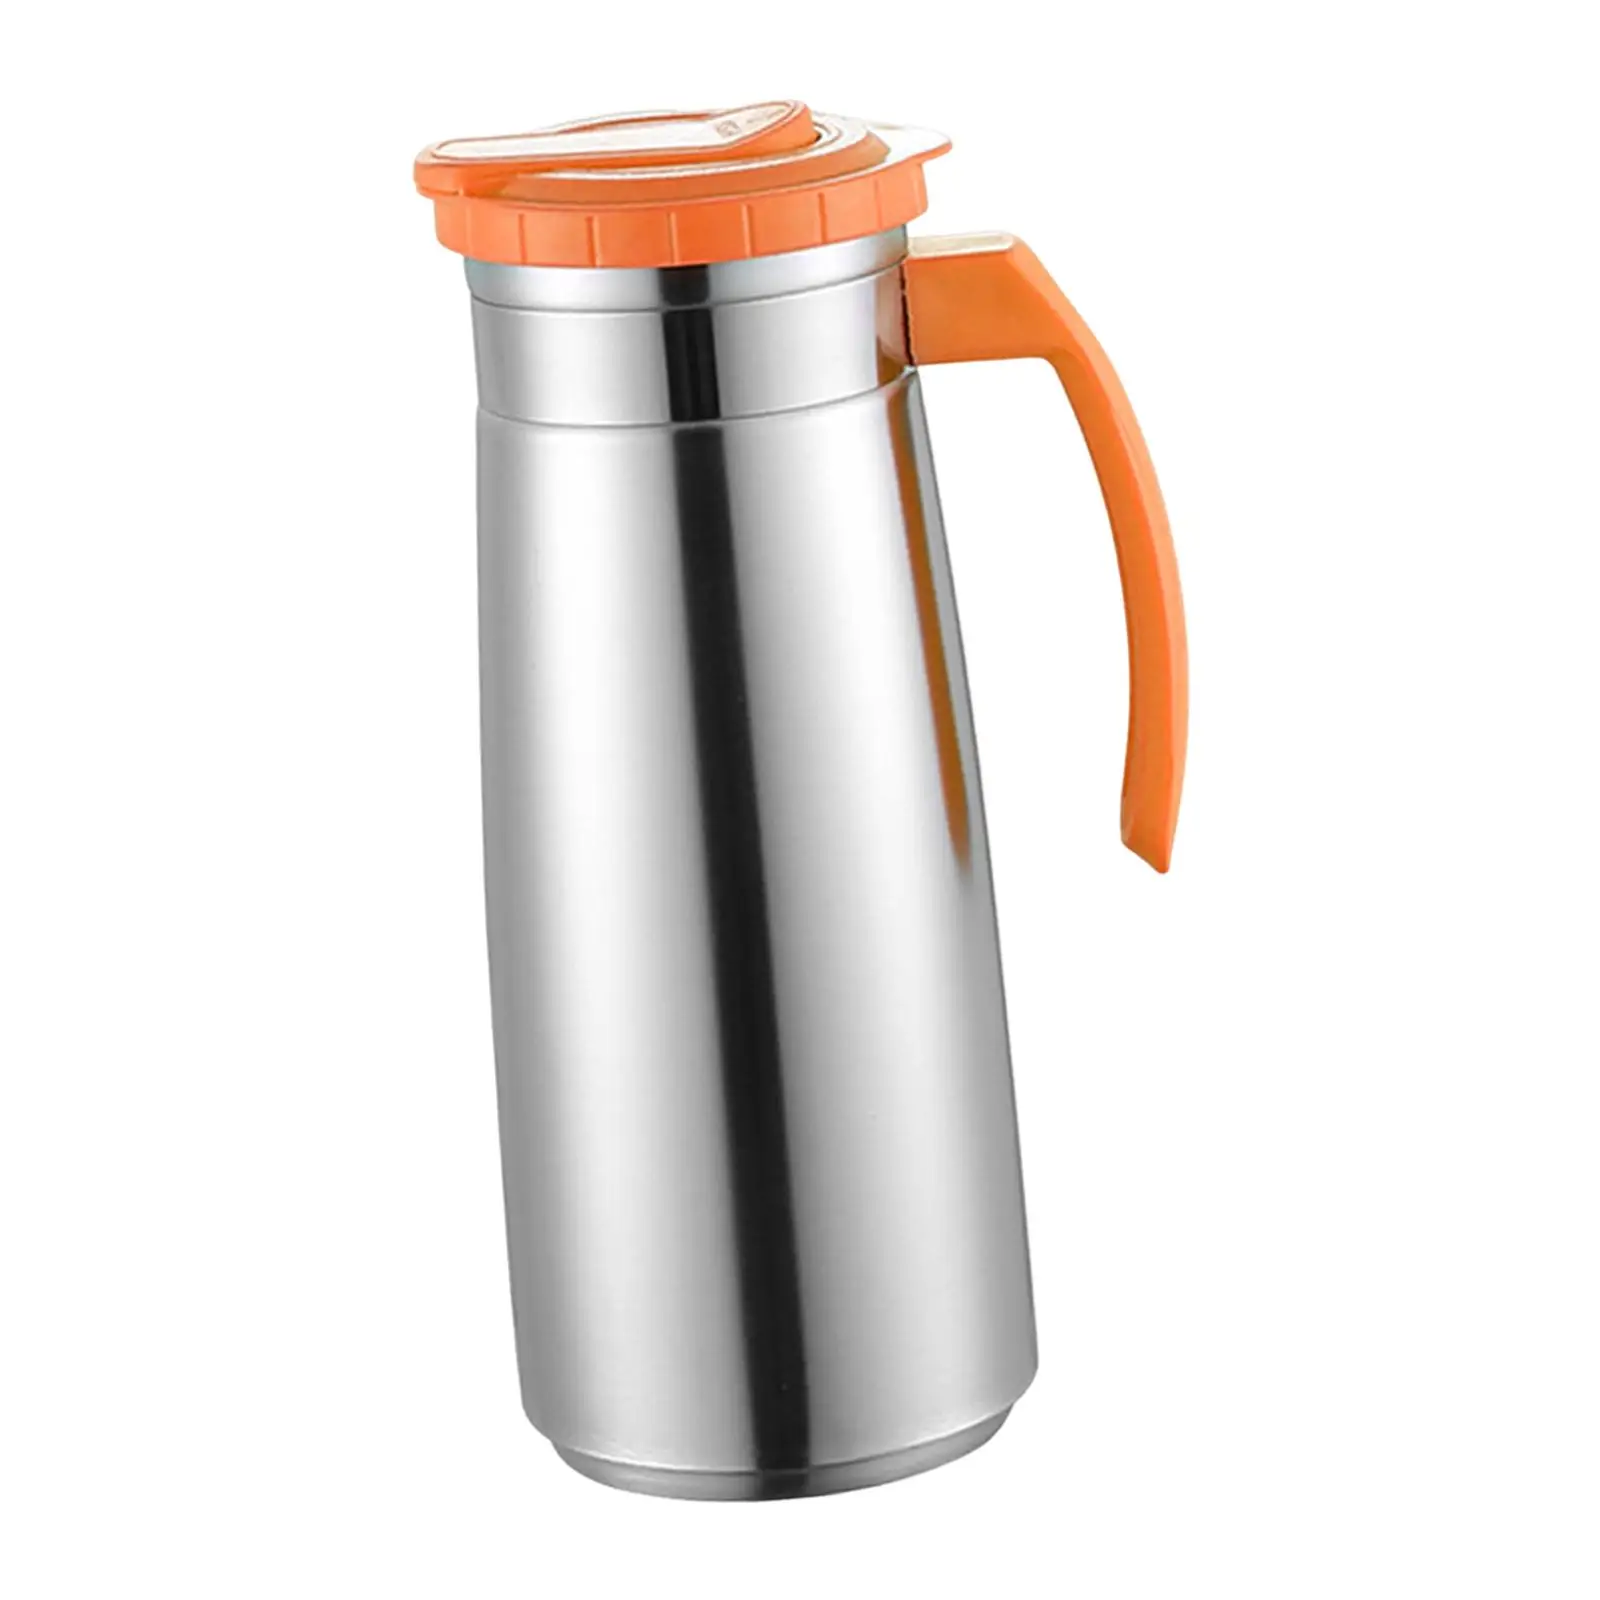 Stainless Steel Jug Drinkware Carafes 1.3L Teapot Kettle Cold Water Kettle for Beverage Juice Drink Lemonade